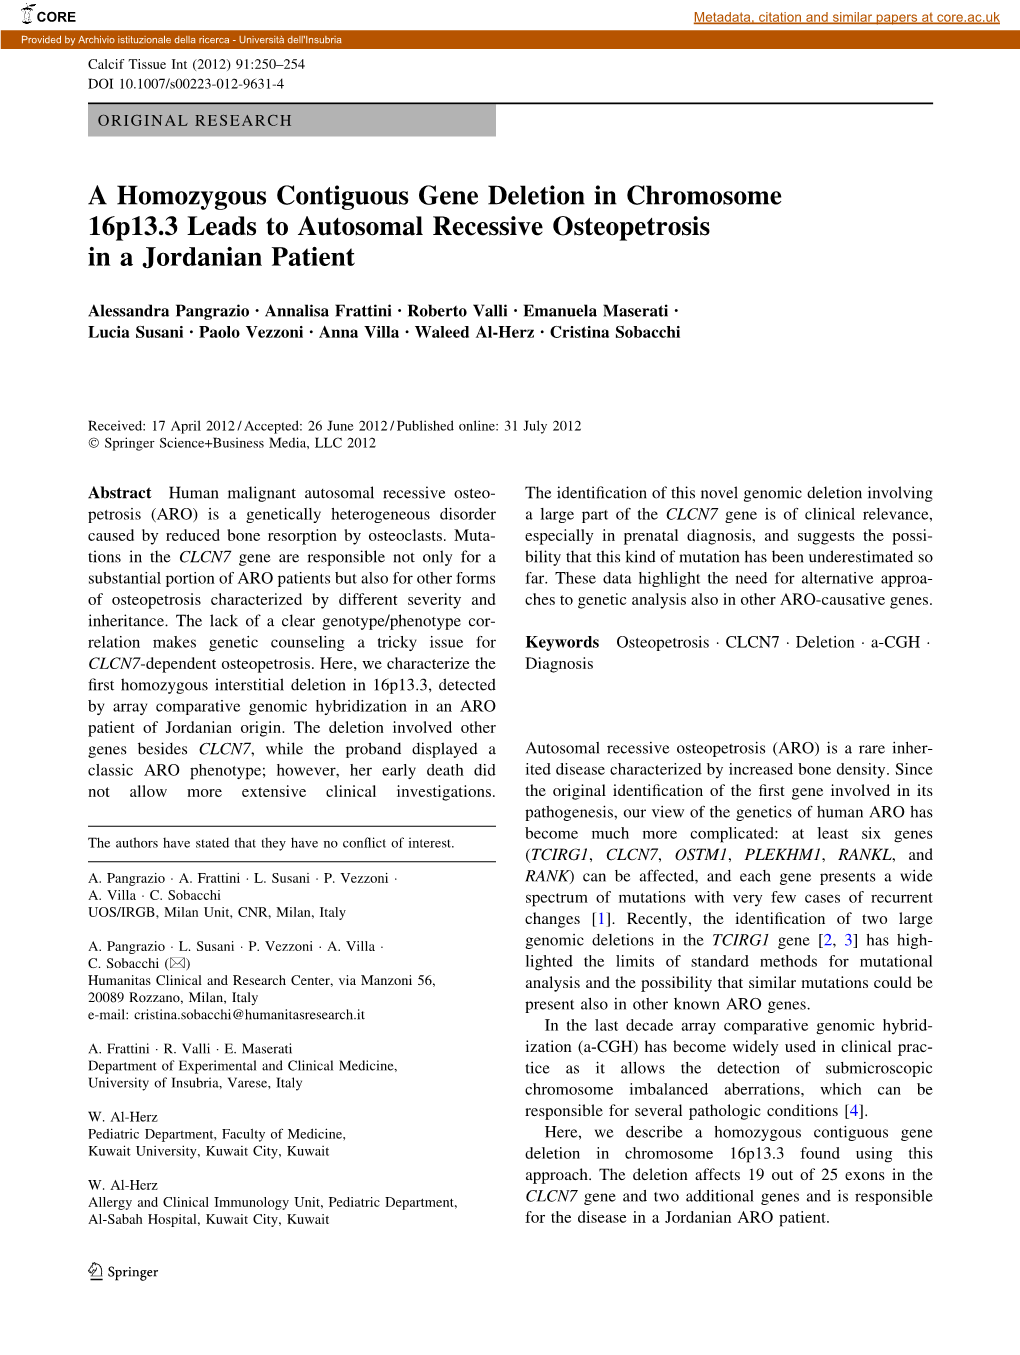 A Homozygous Contiguous Gene Deletion in Chromosome 16P13.3 Leads to Autosomal Recessive Osteopetrosis in a Jordanian Patient